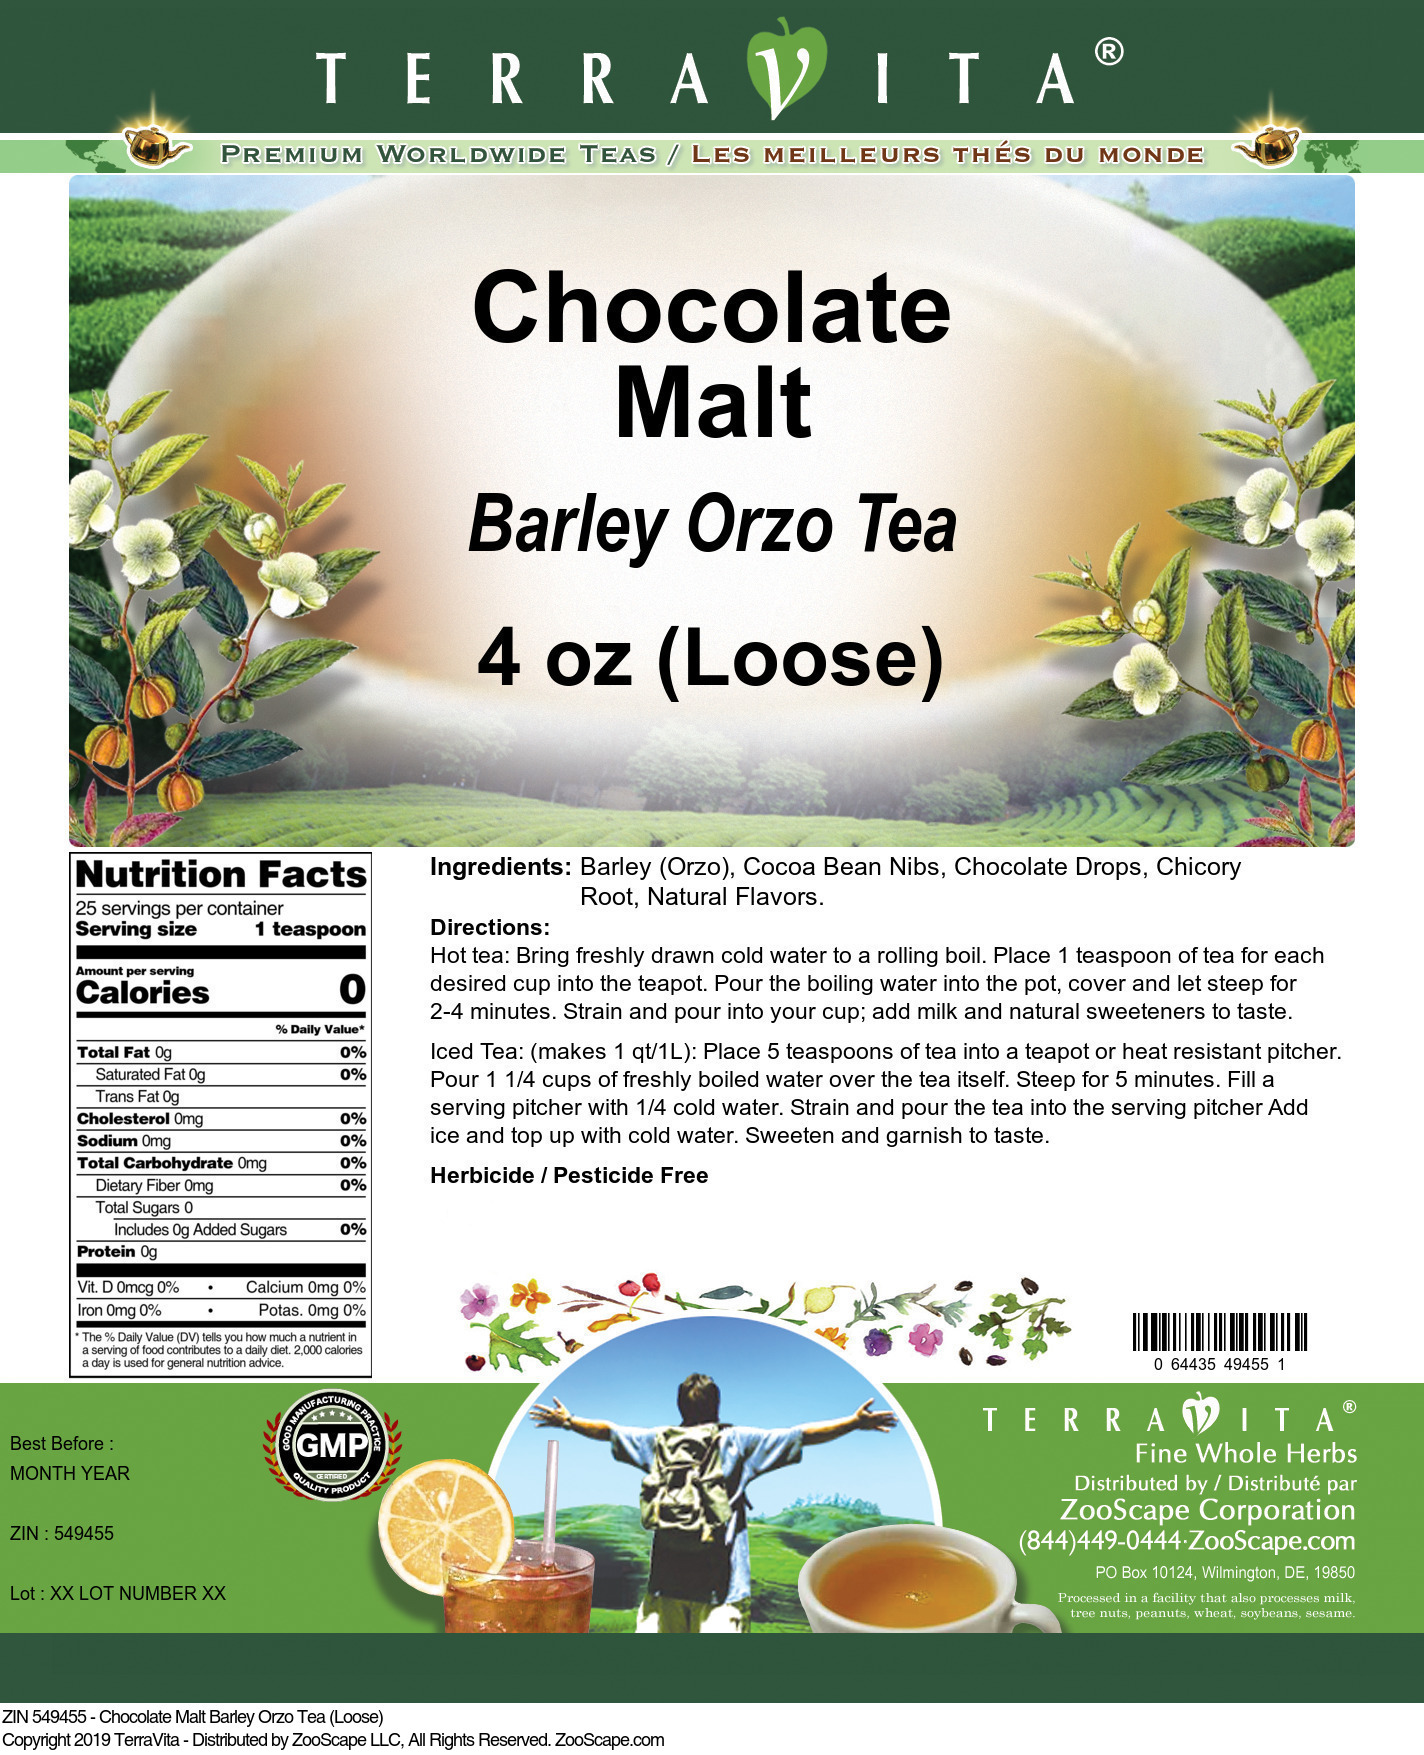 Chocolate Malt Barley Orzo Tea (Loose) - Label